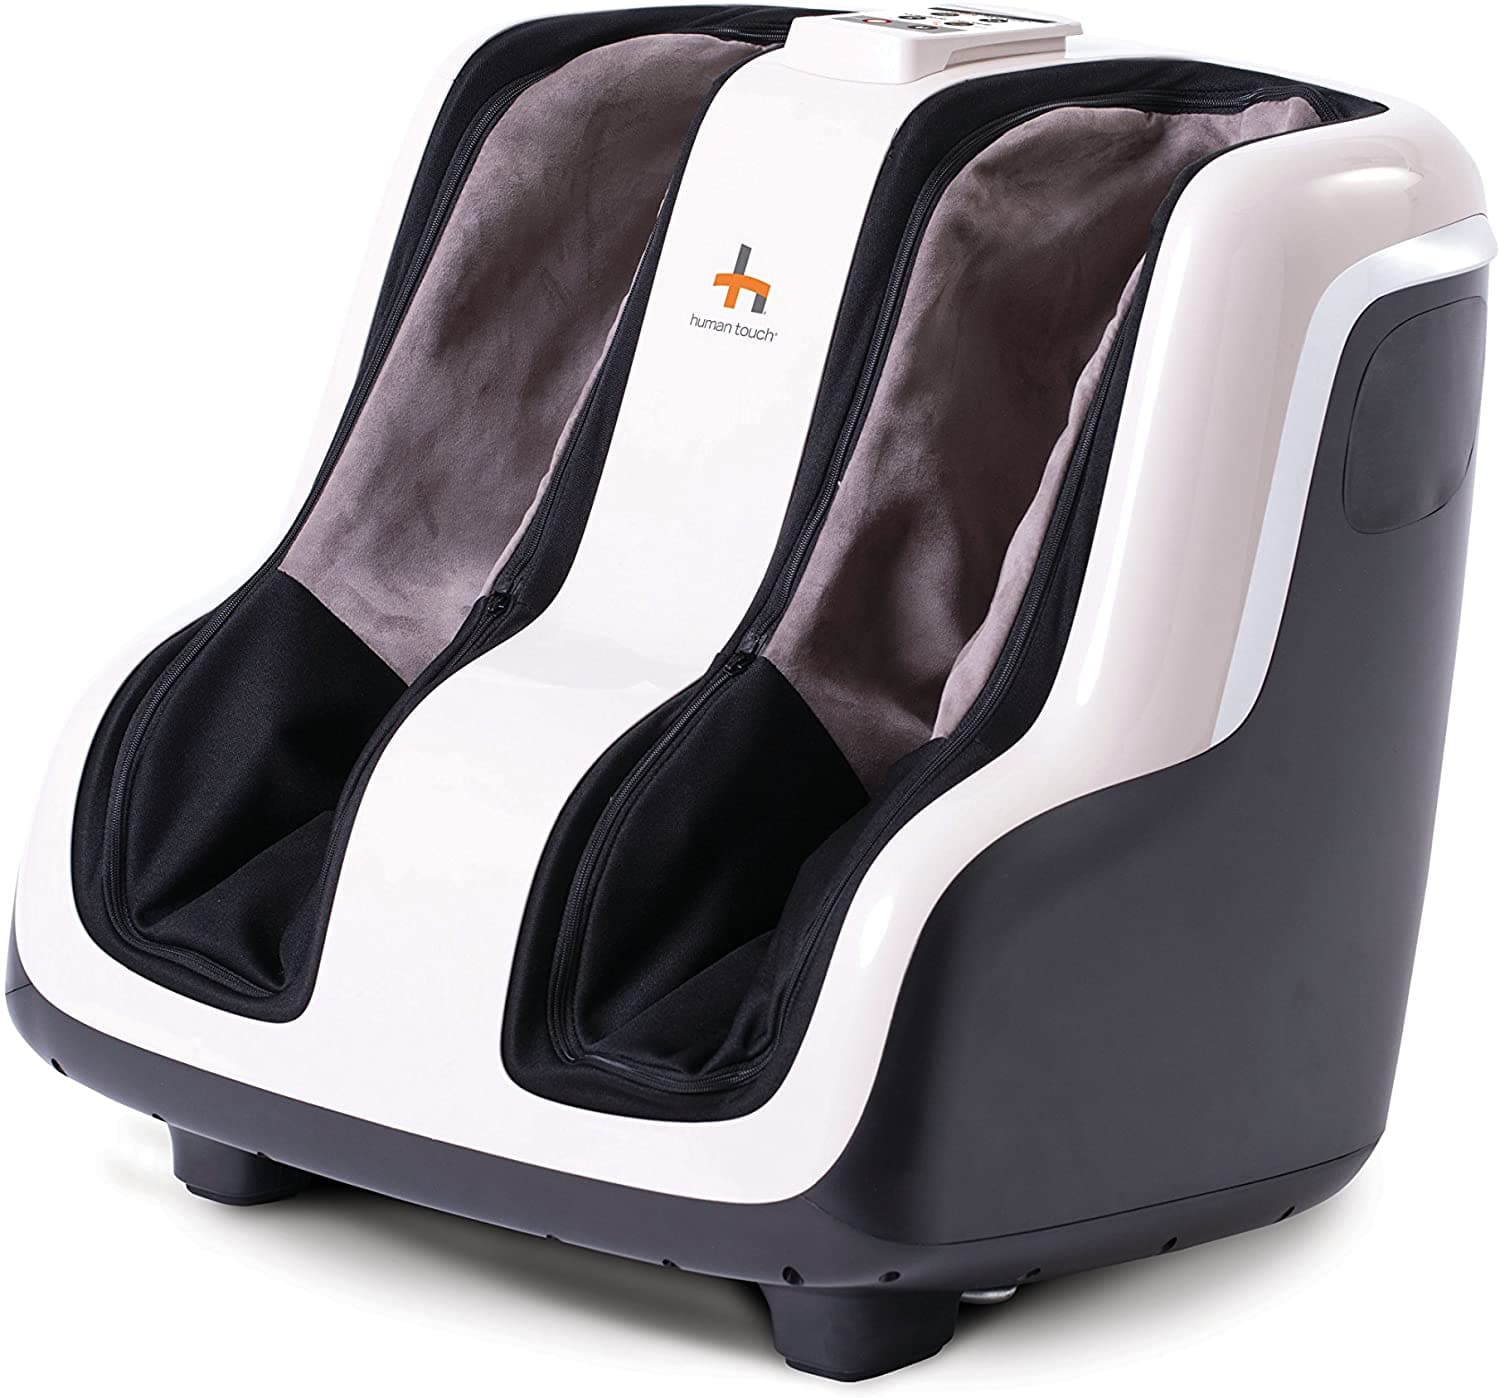 Memory Foam Vibration Foot Massager with Heat Under Desk - 535